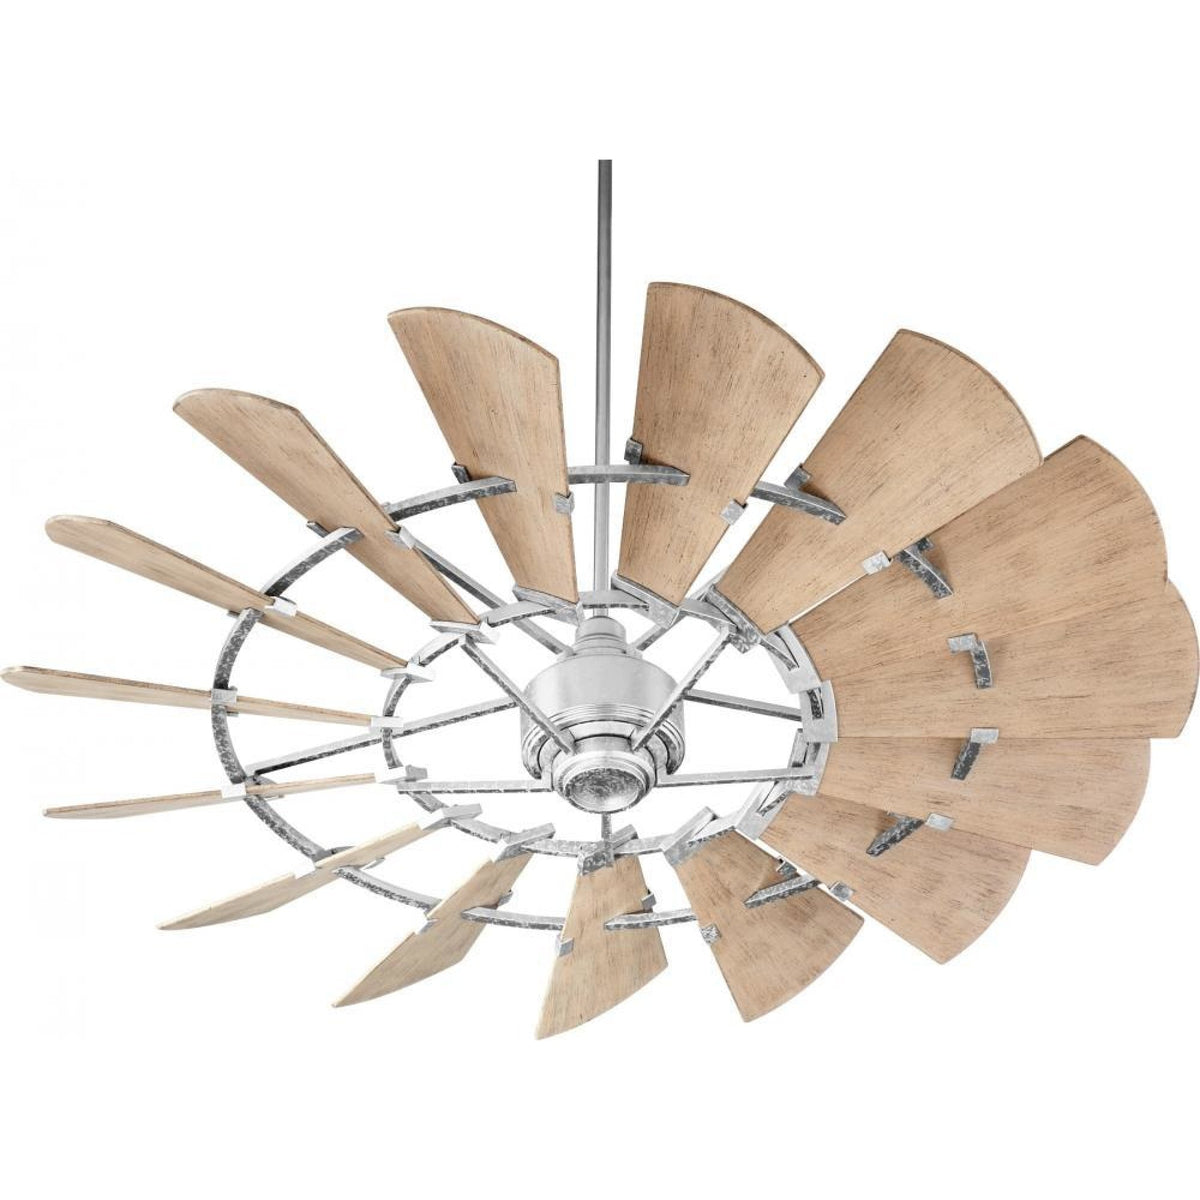 Quorum Windmill Ceiling Fan - Galvanized - Outdoor 196010-9 60 inch Coastal Lighting